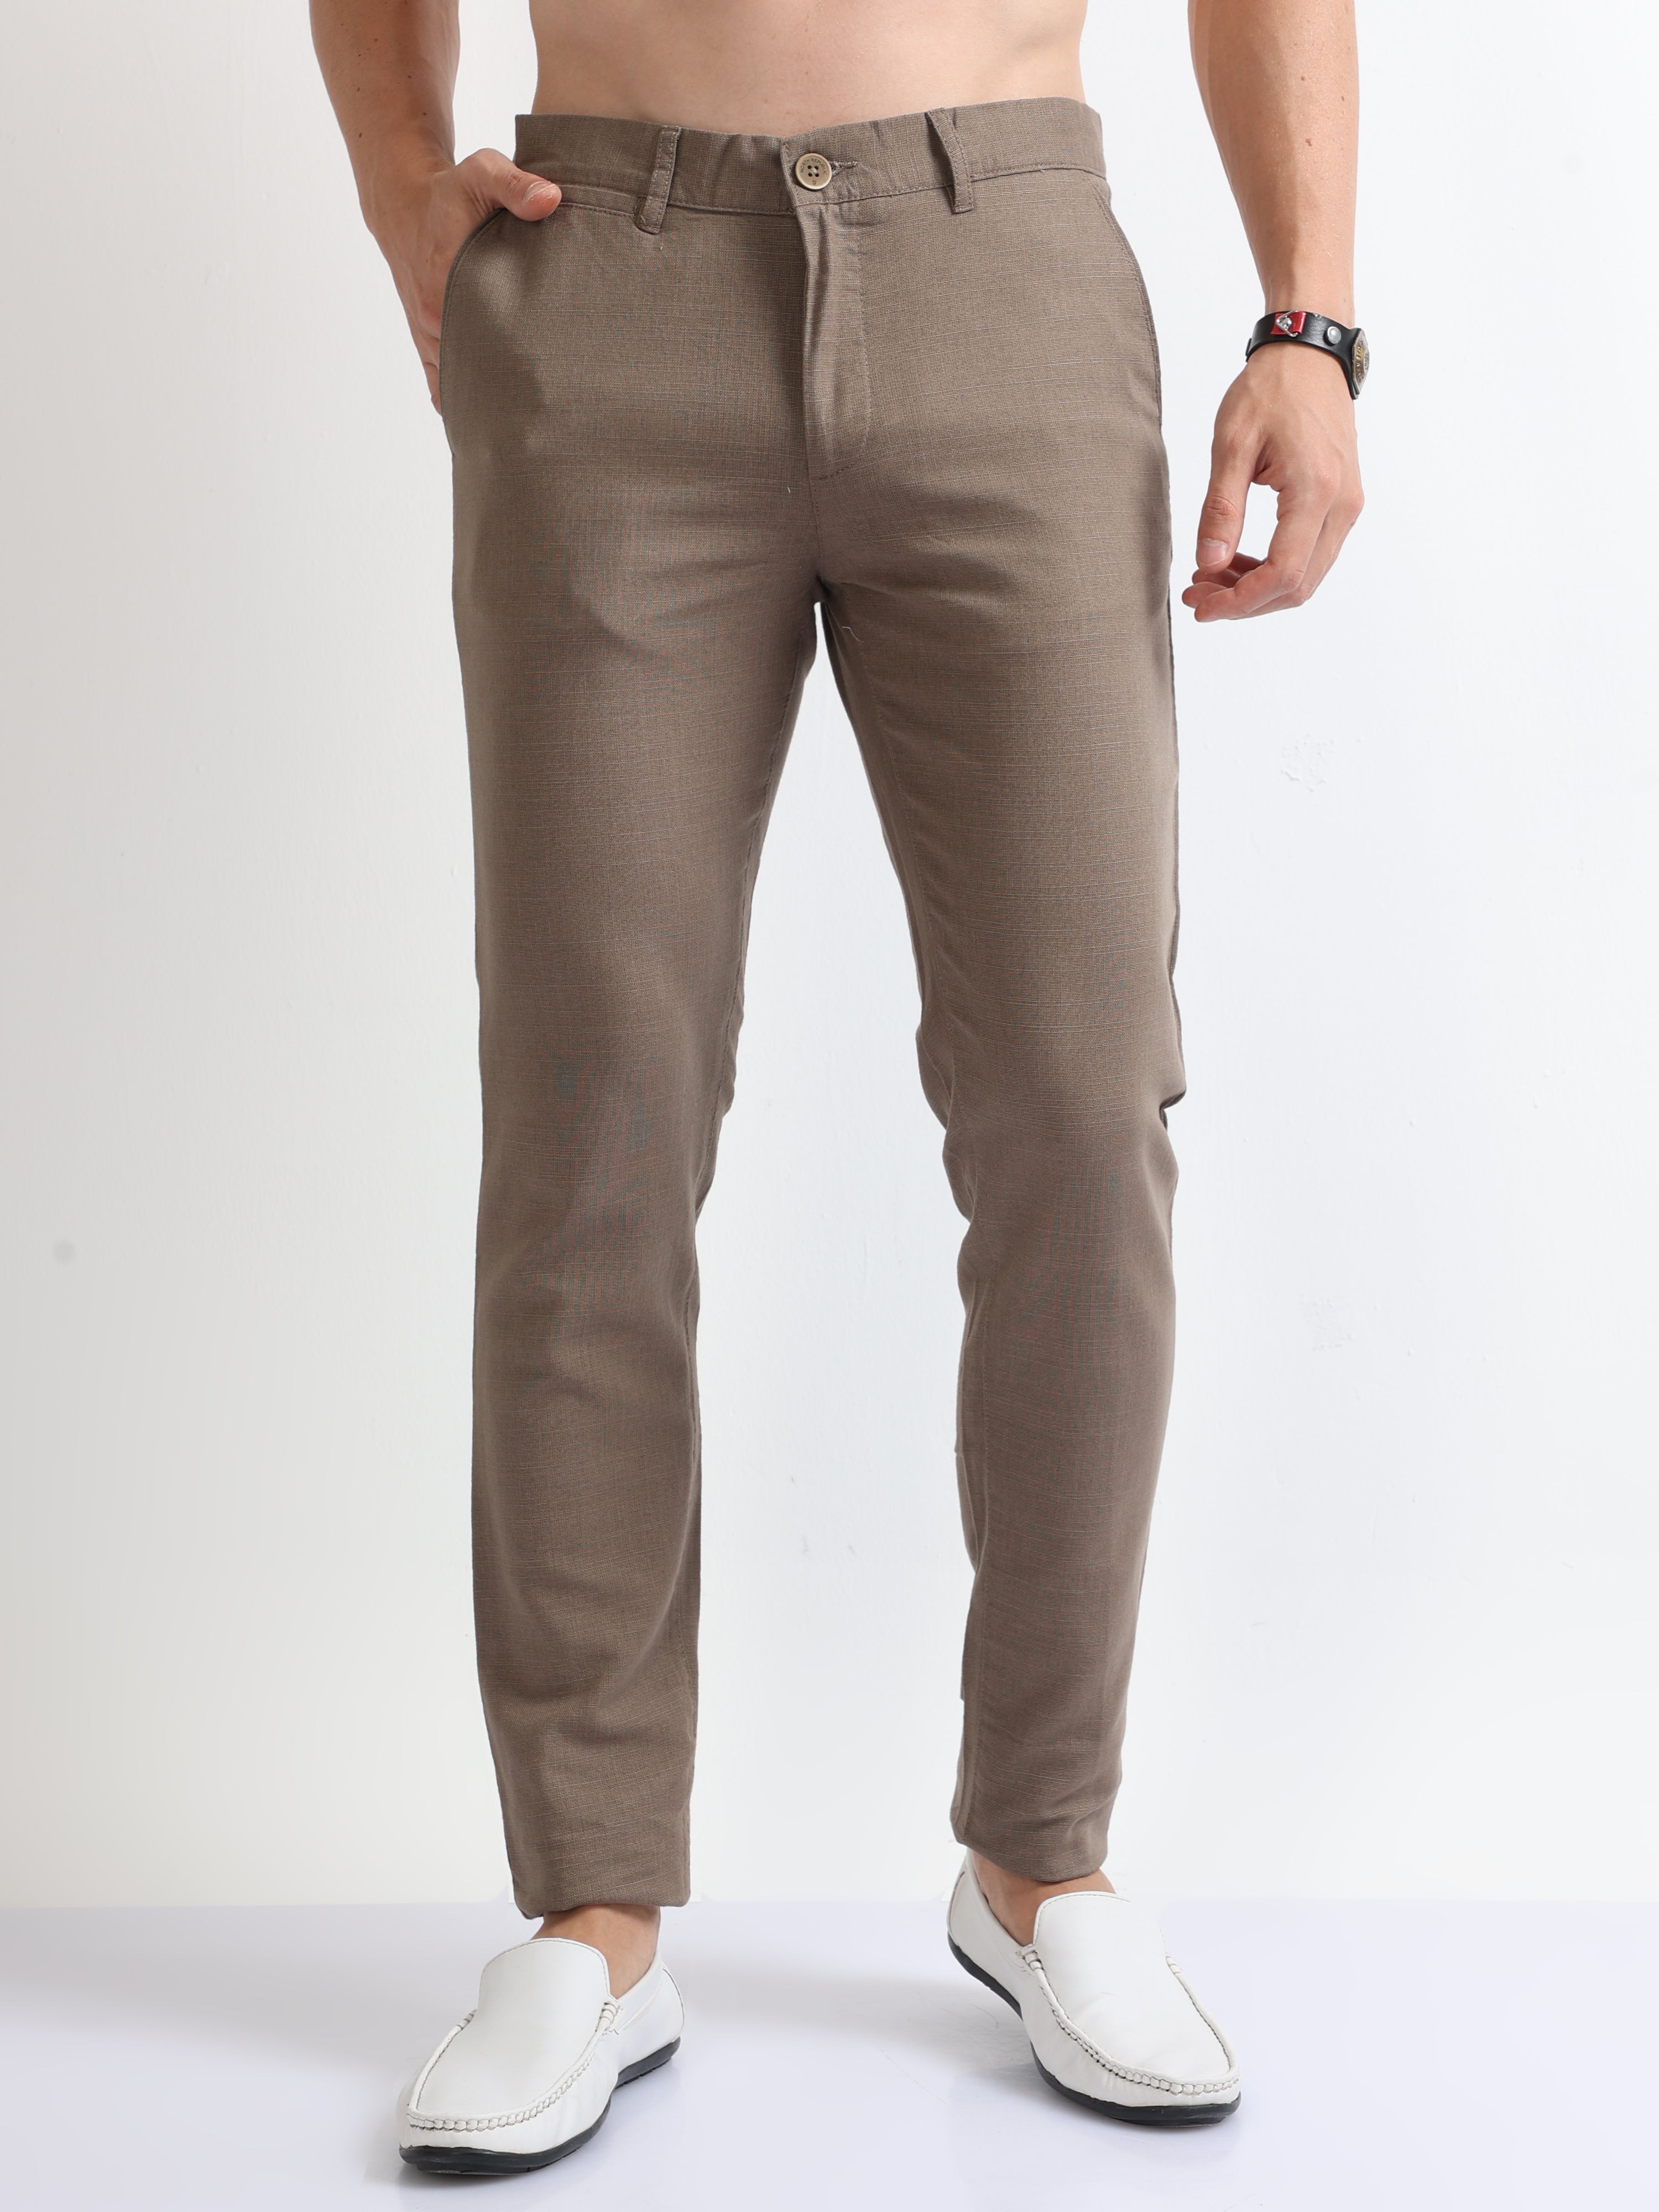 Men Linen and Cotton Blend Trousers Straight Fit Bottoms Elastic Waist  Pants | eBay